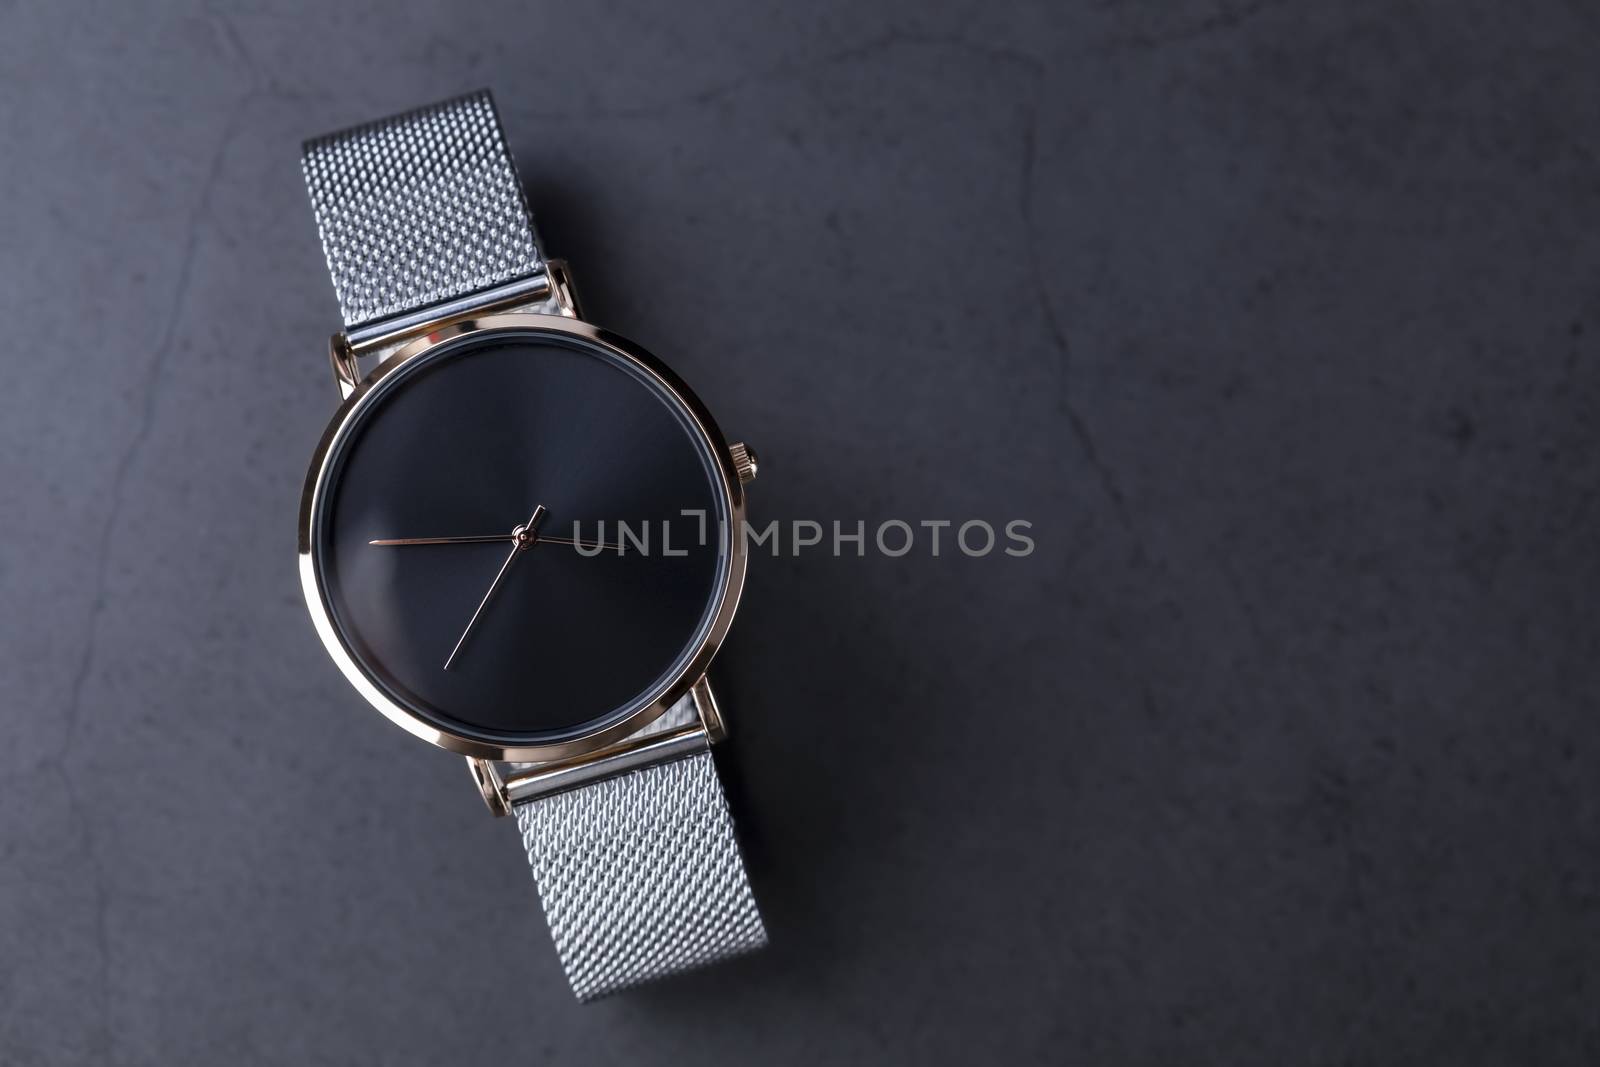 Black wrist watch for women with metal bracelet on black background.